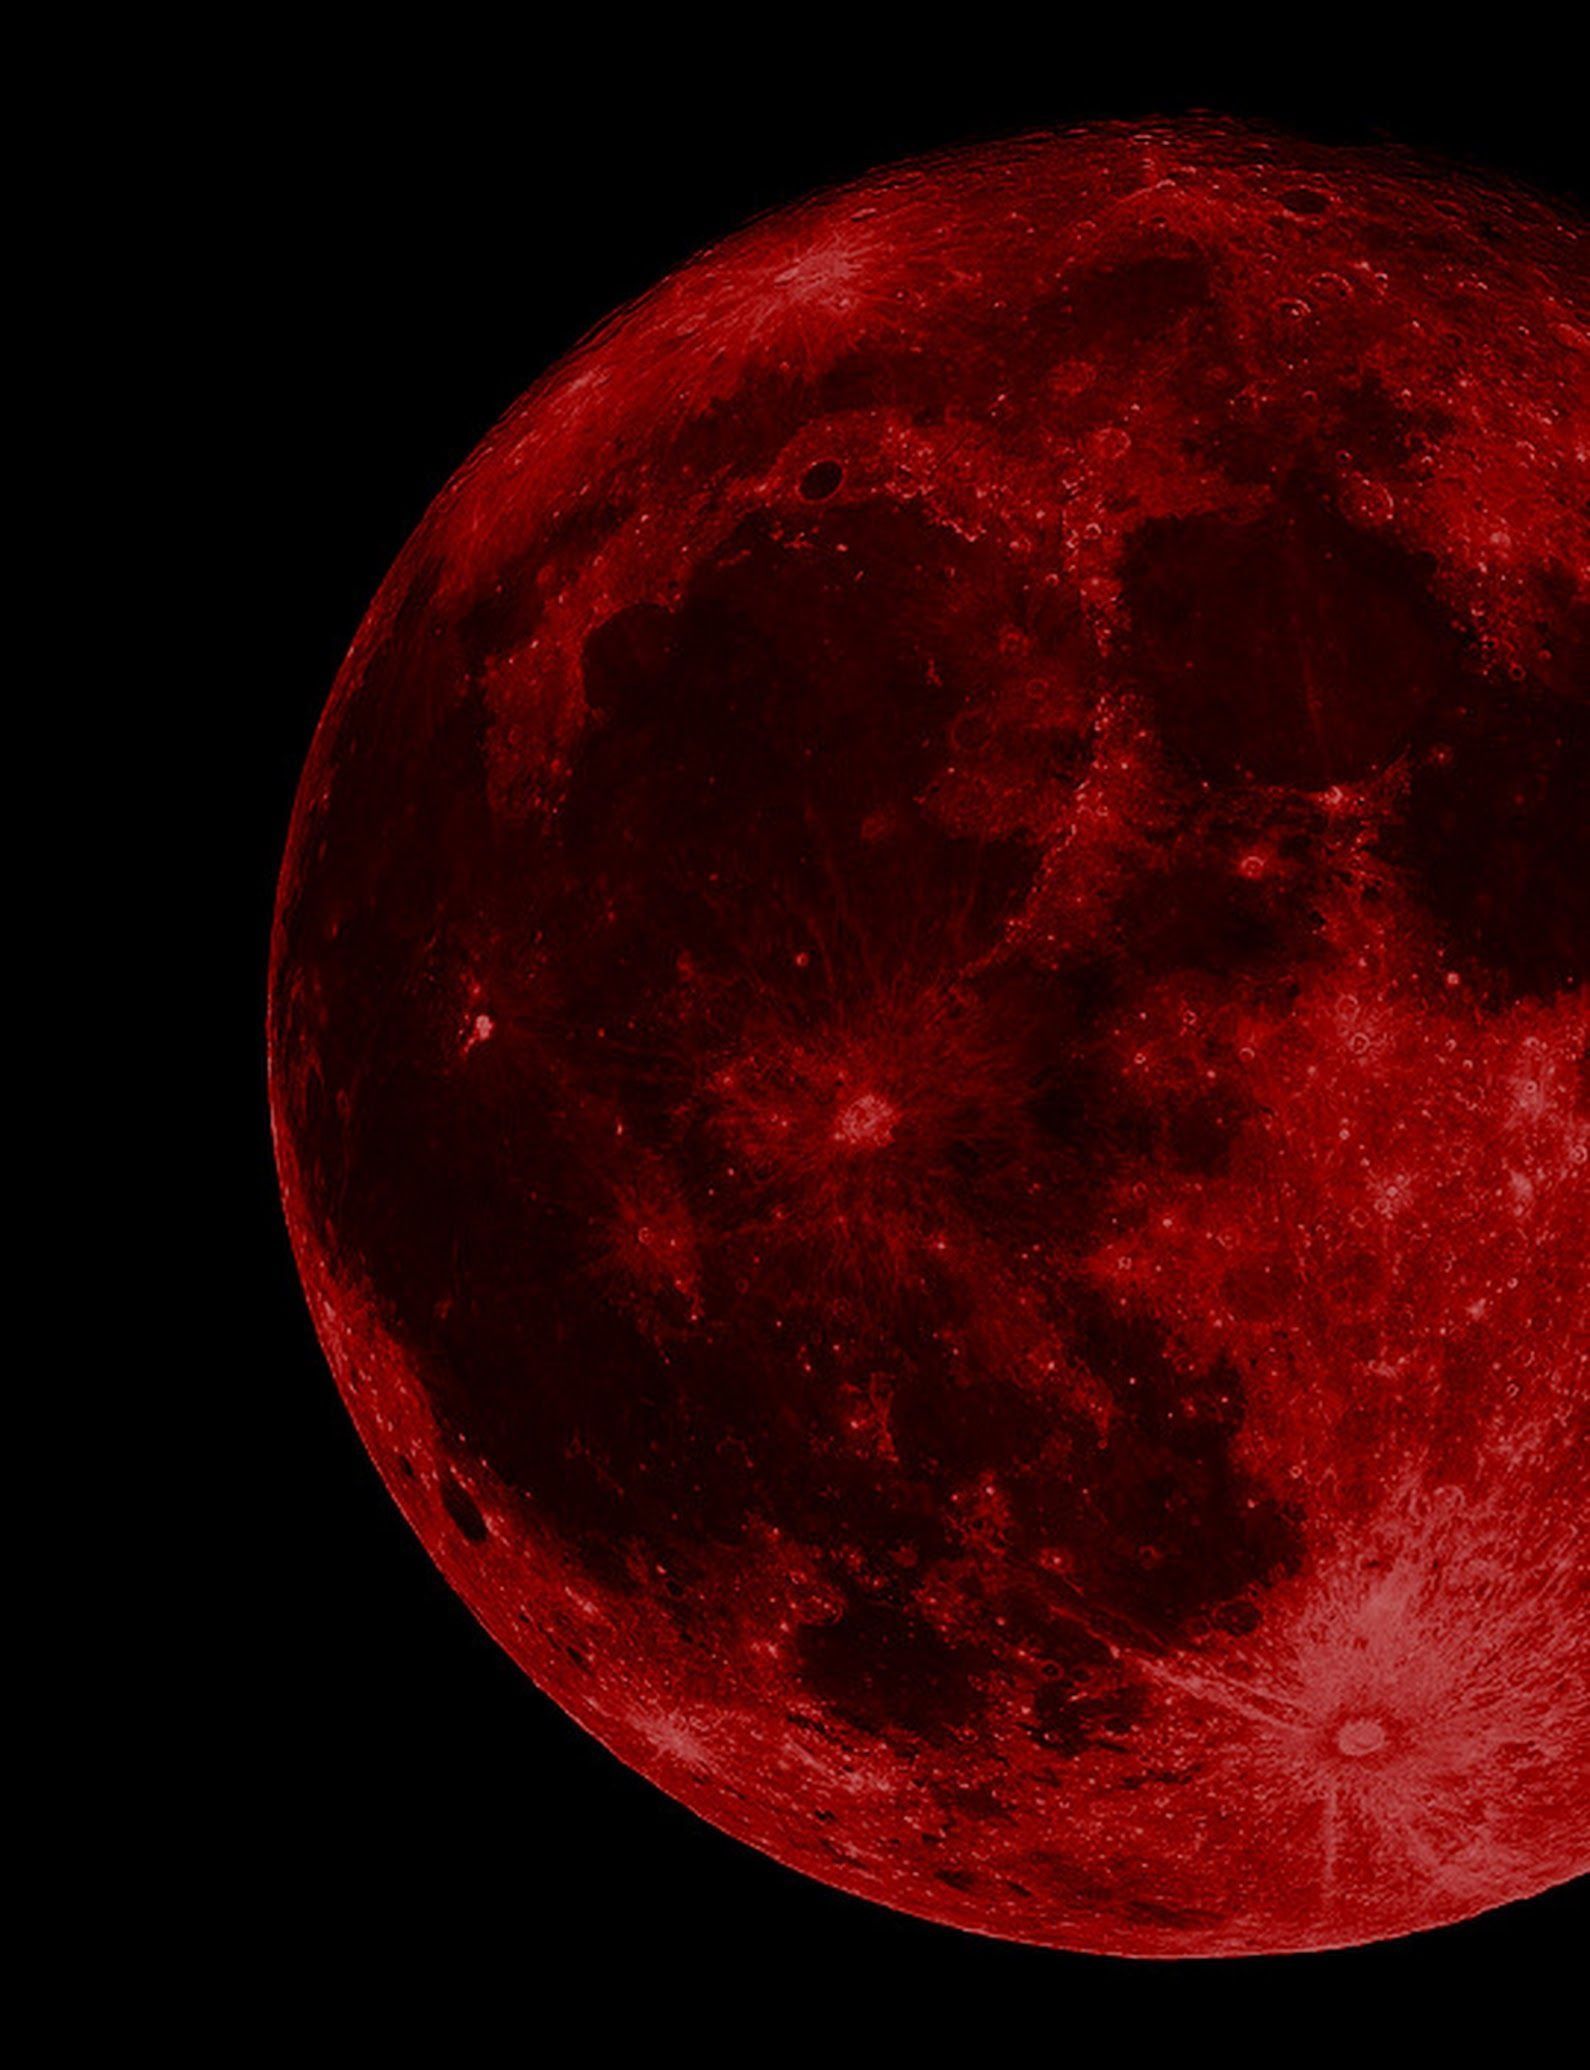 A red full moon against a black sky - Crimson